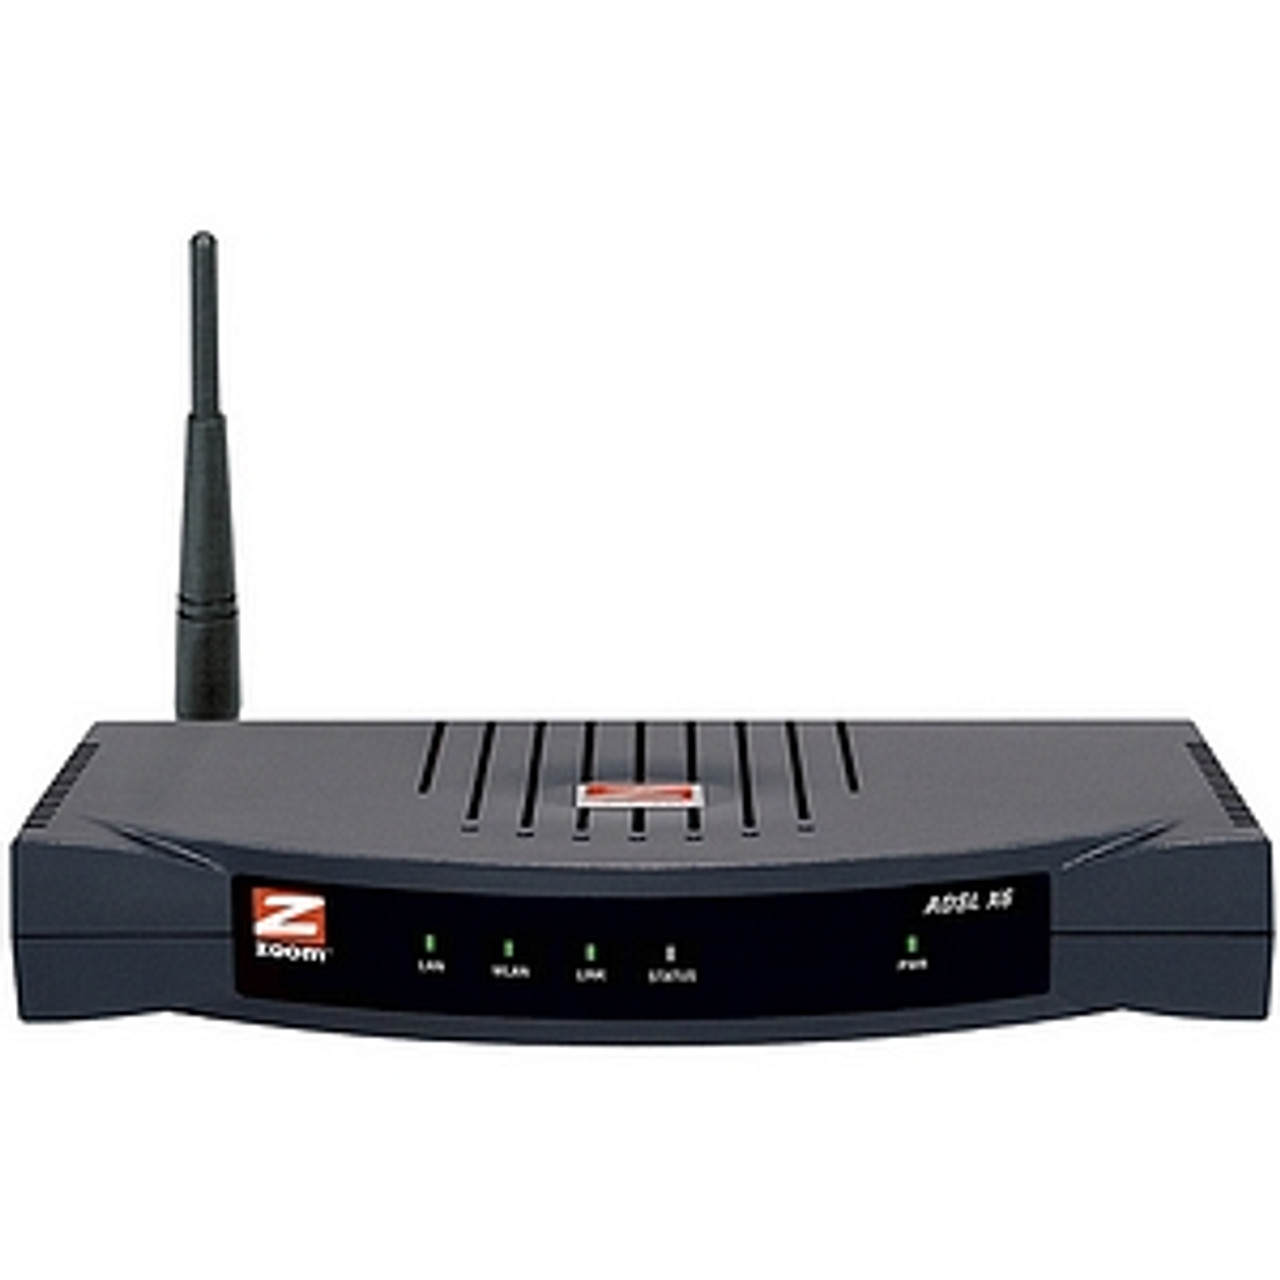 5590-00-00BF Zoom 5590 ADSL X6 2/2+ Wireless Router 4 x LAN (Refurbished)